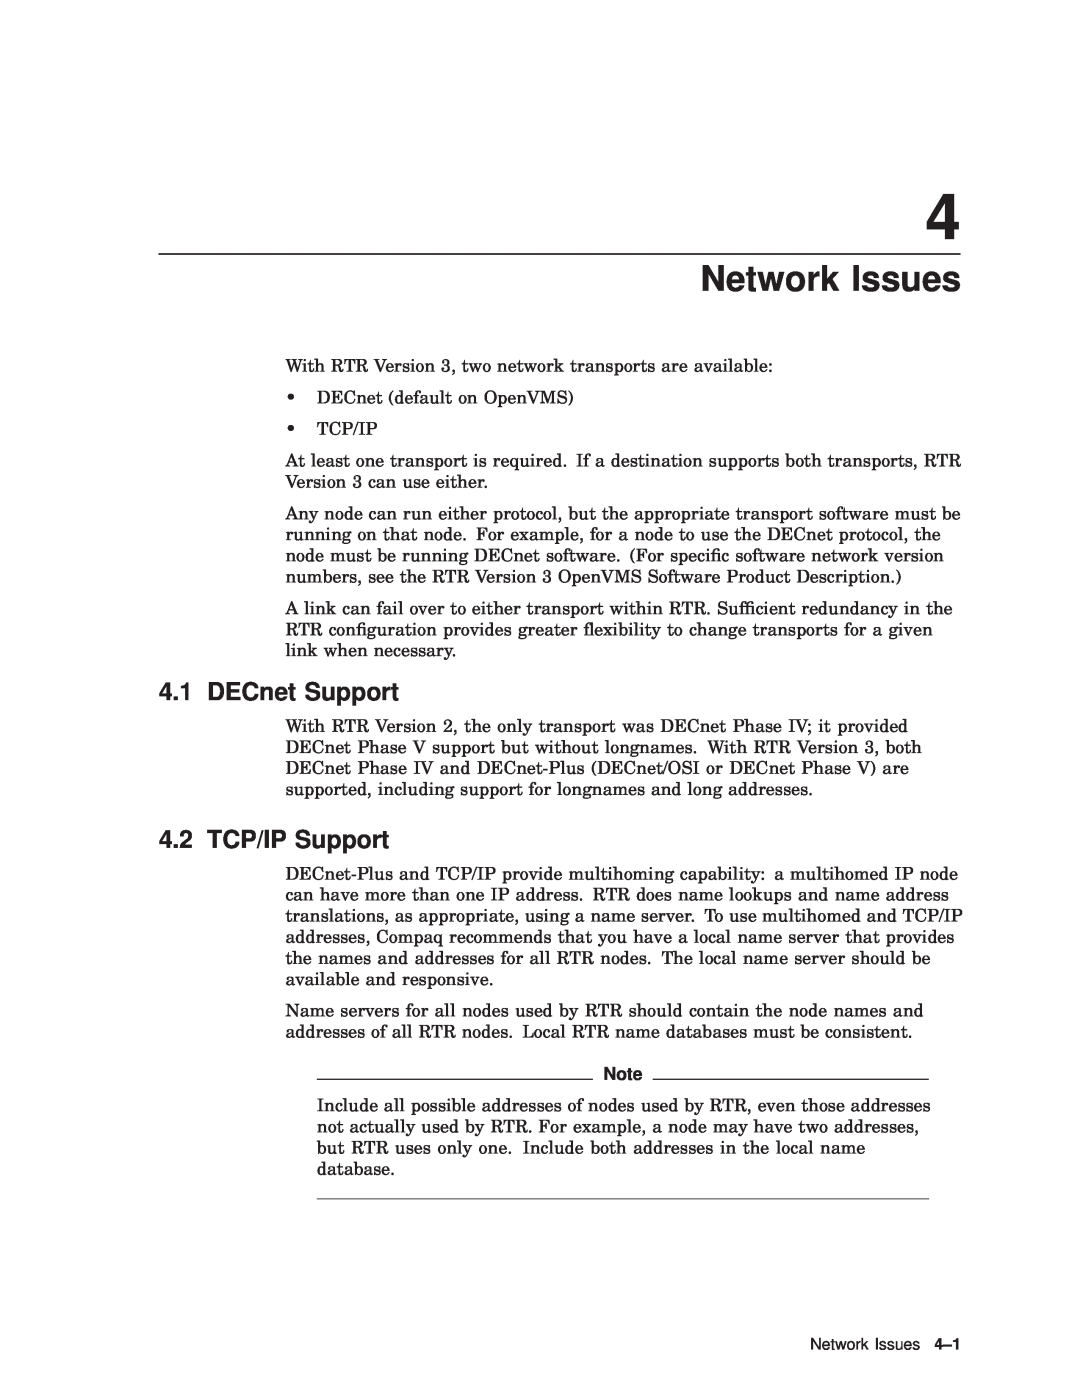 Compaq AAR-88LB-TE manual Network Issues, DECnet Support, 4.2 TCP/IP Support 